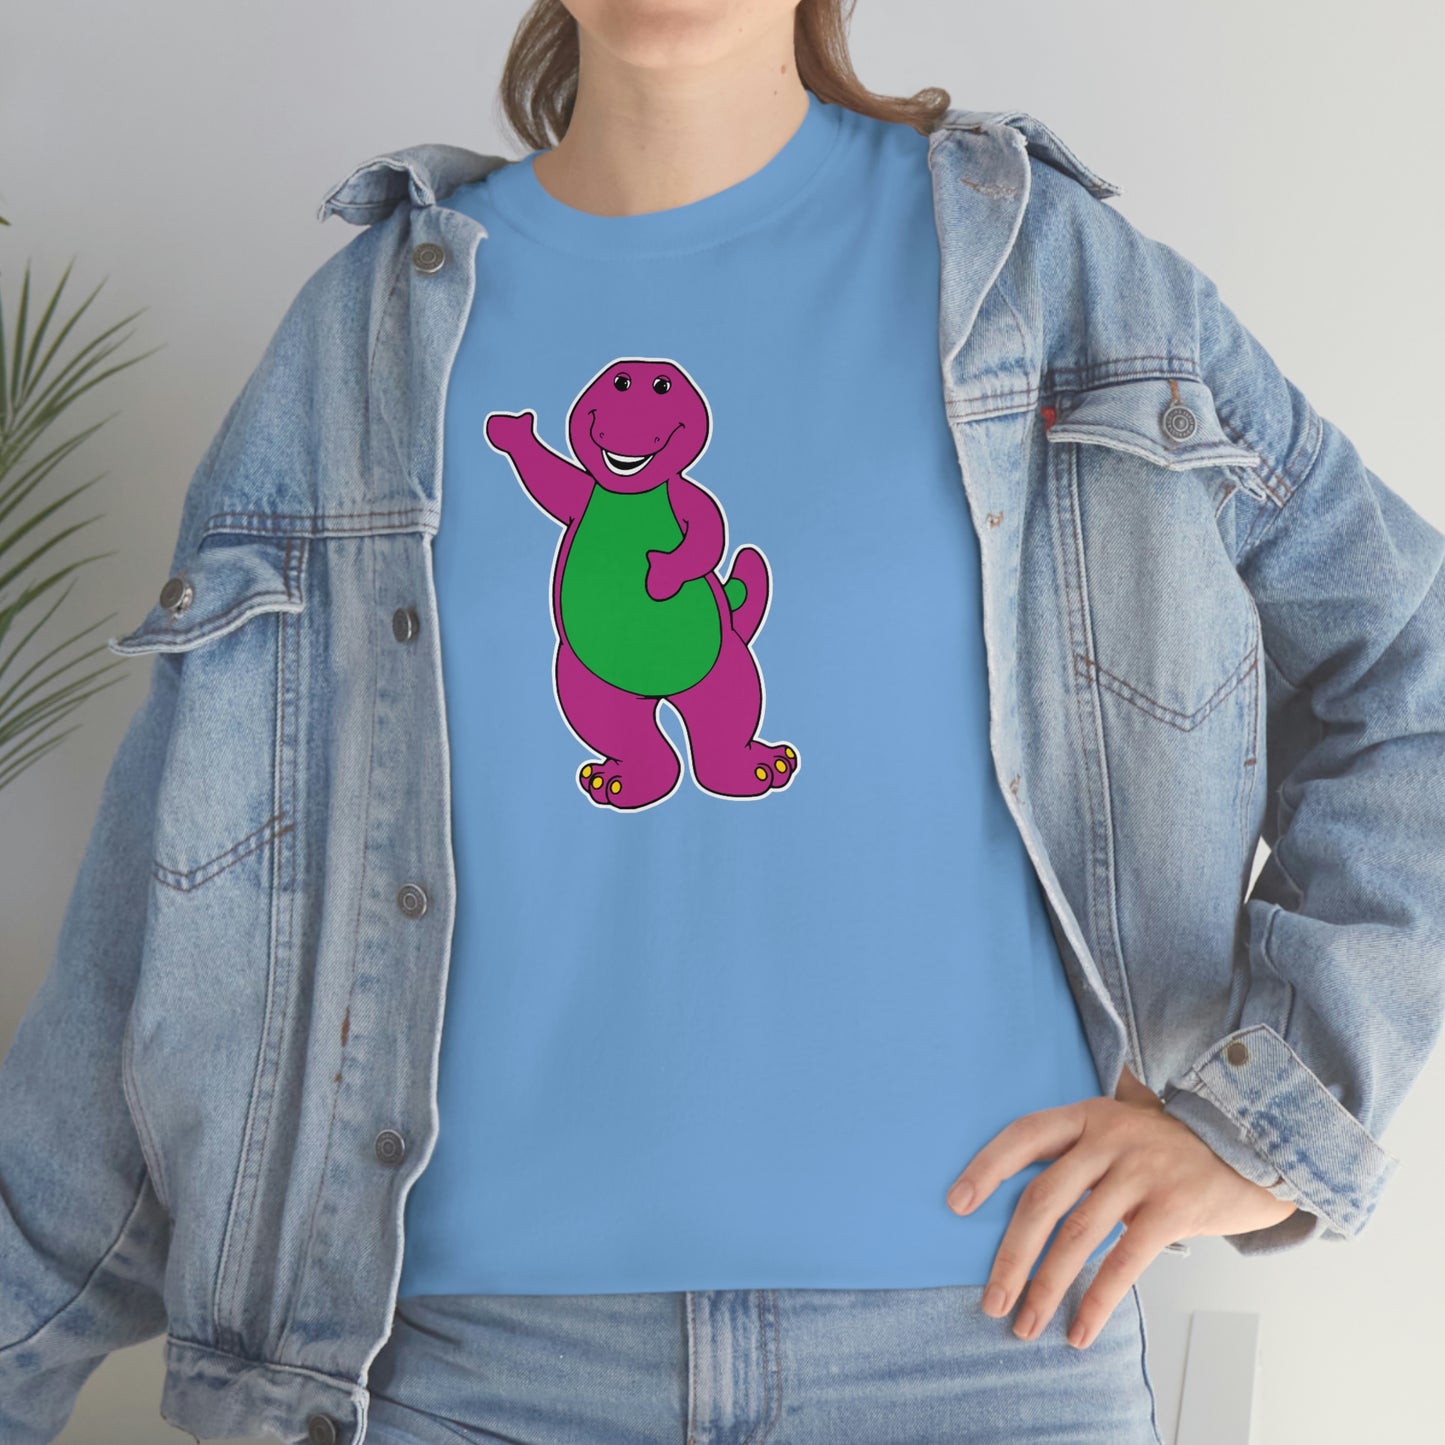 Barney T-Shirt